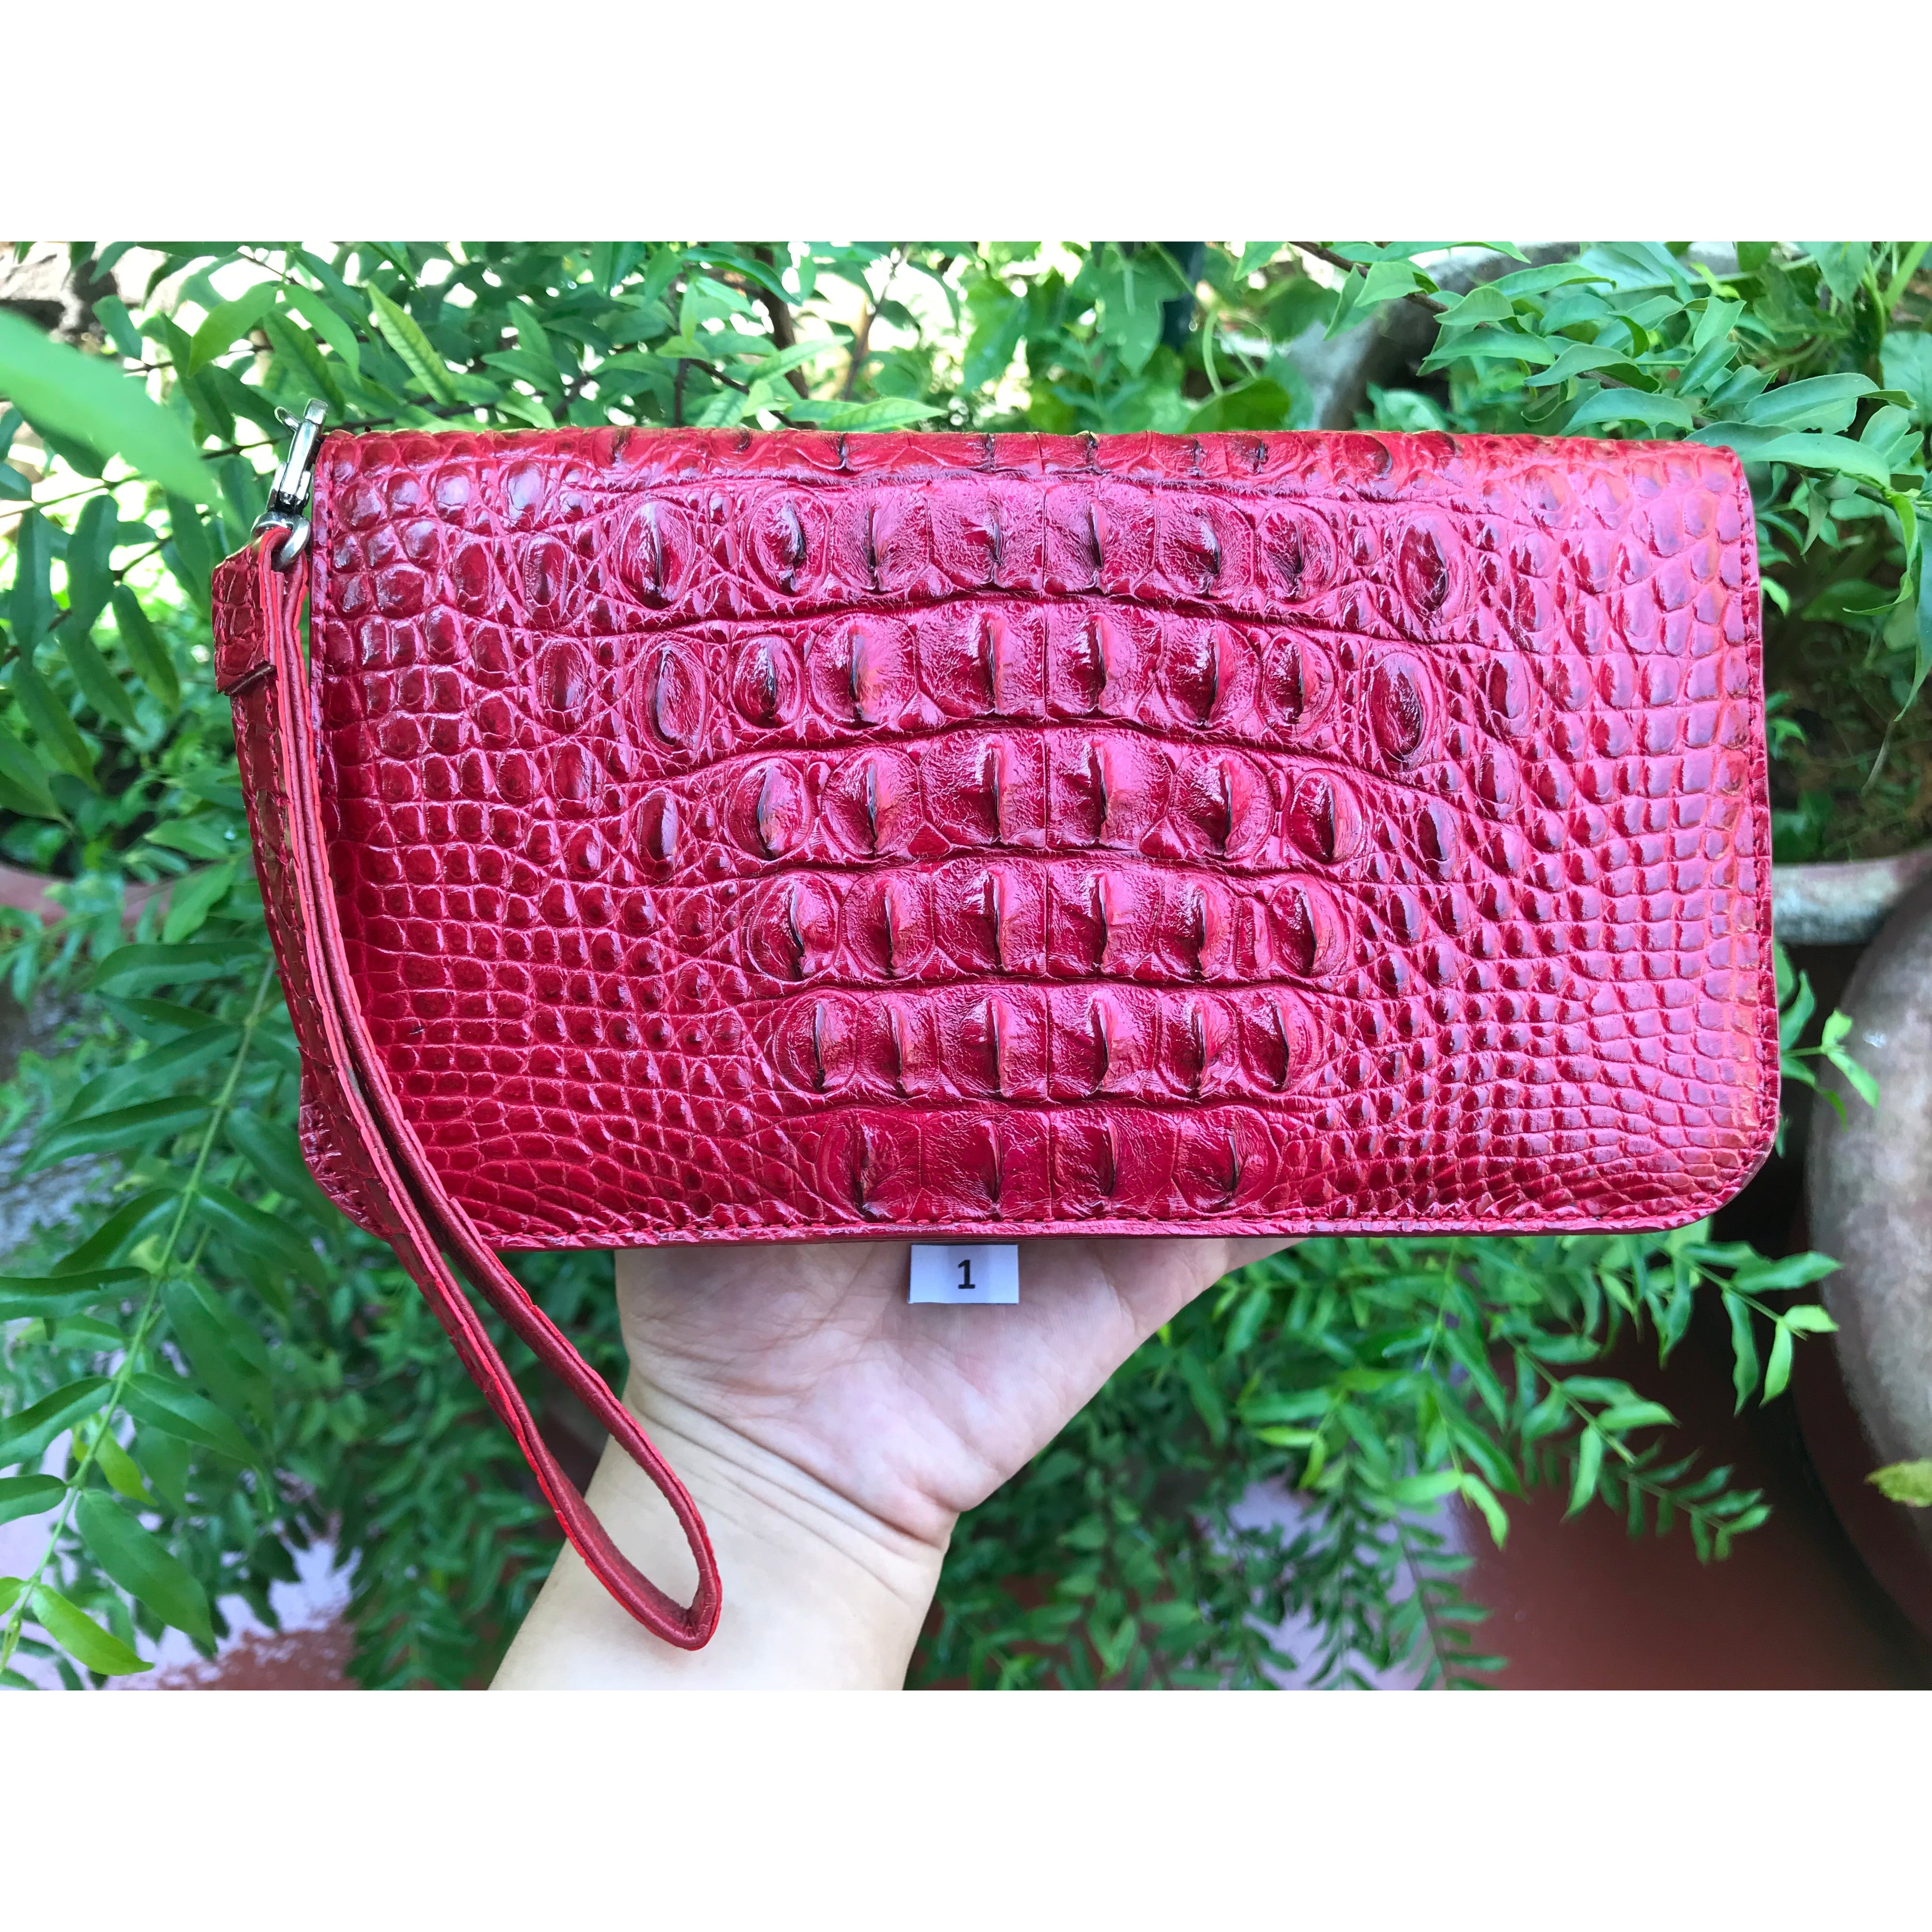 Trunk Chain Wallet - Luxury Shiny Crocodile Red